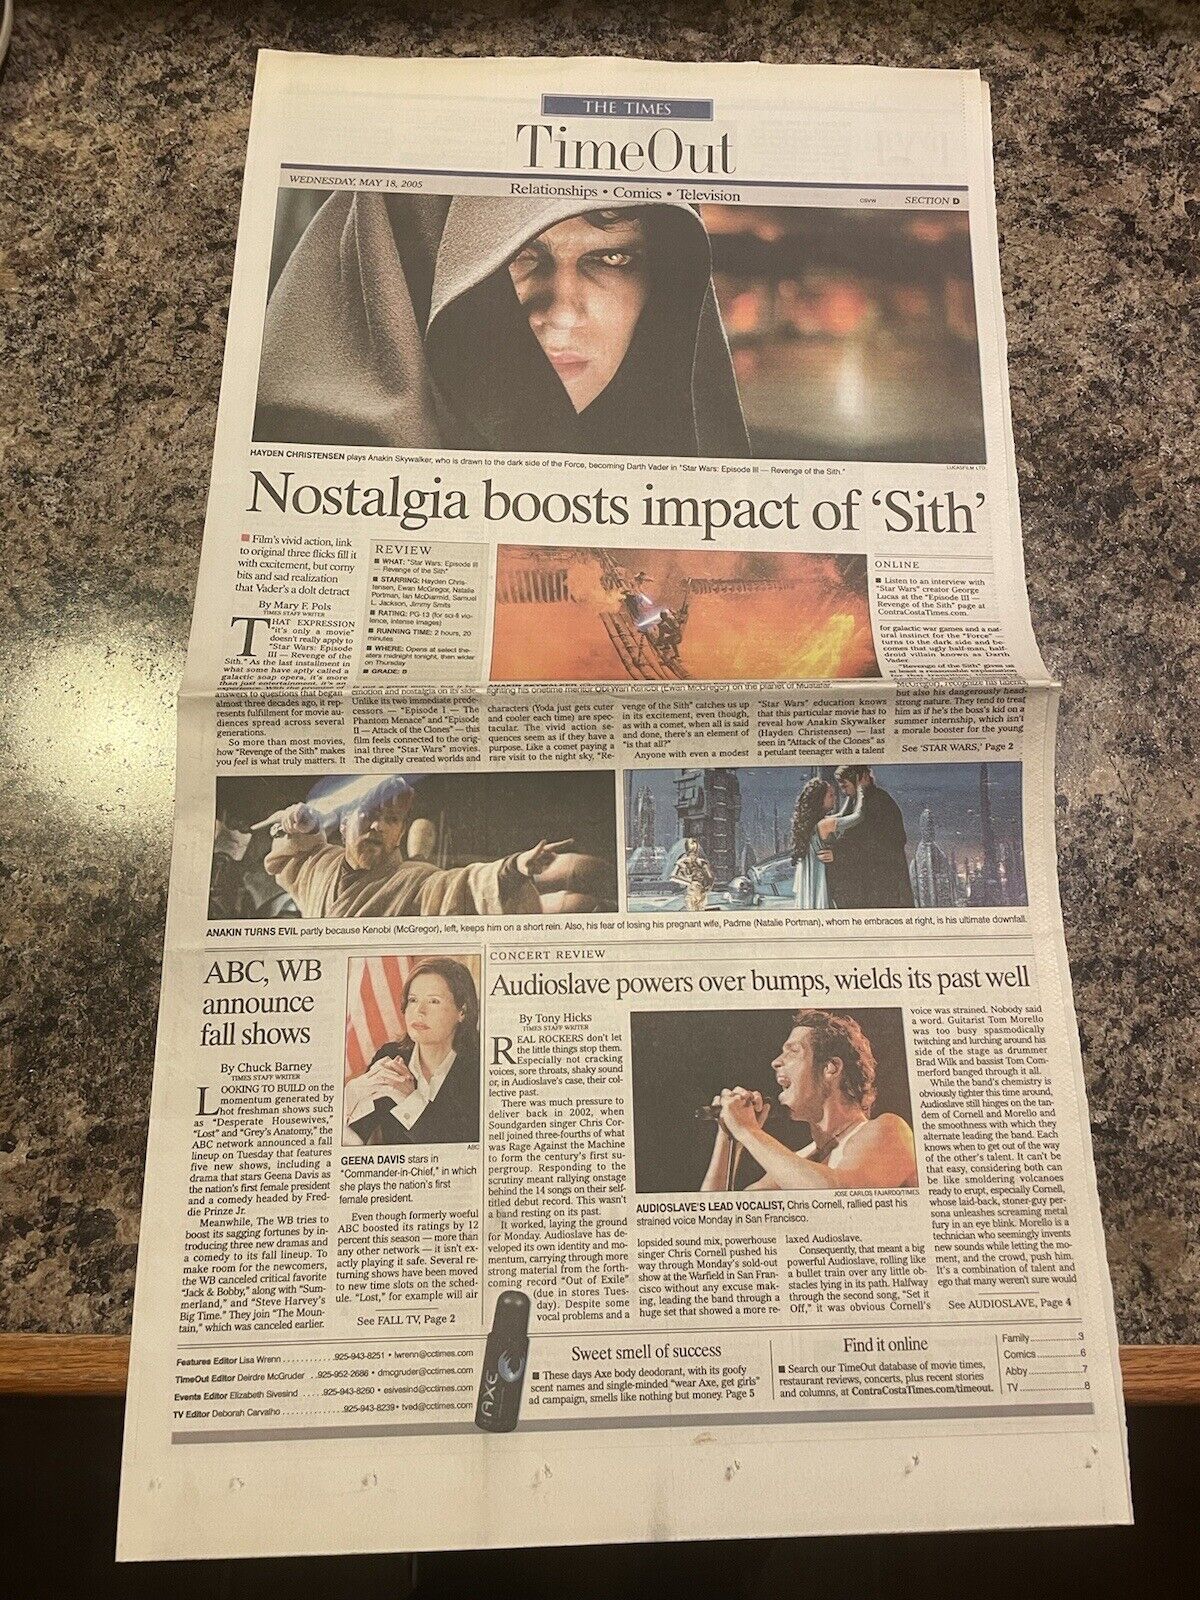 2005 Star Wars Revenge Of The Sith Newspaper